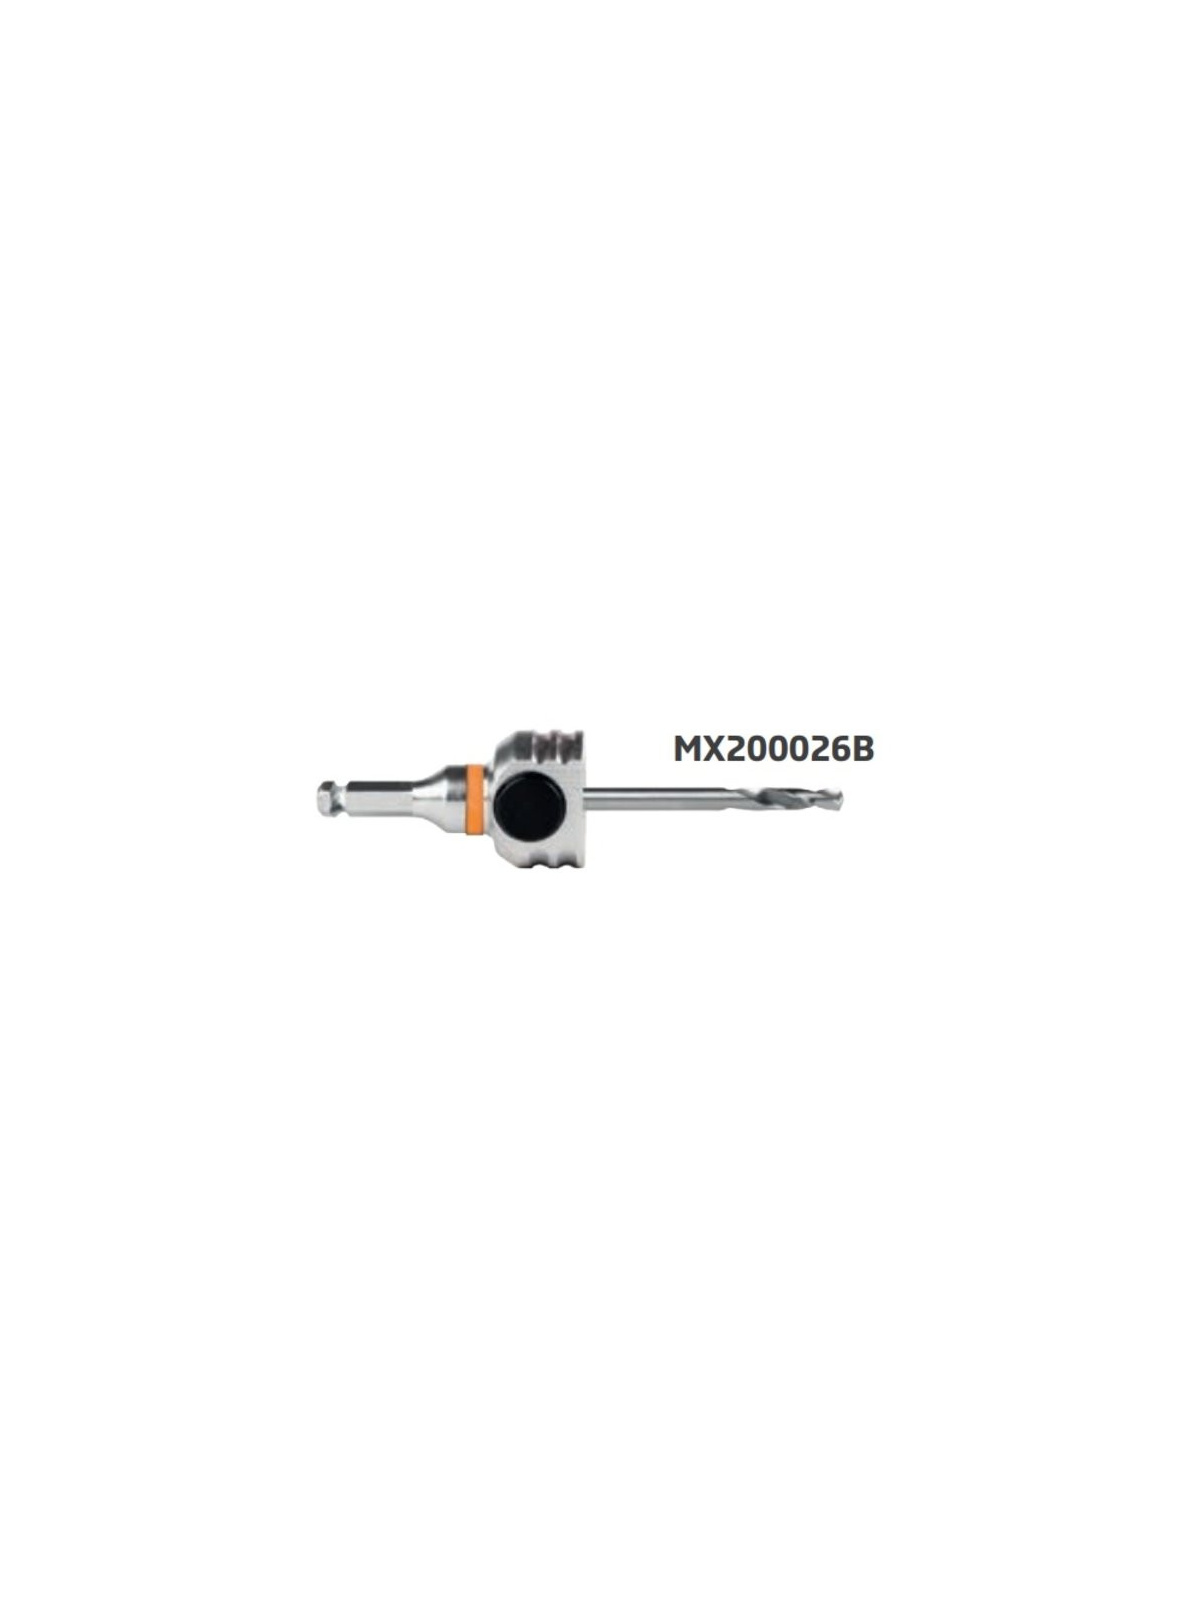 Mandrex MXqs Aufnahmedorn (komplett) mit HSS-Zentrierbohrer (kurz)  L105mm 6.35mm  MX200026B | JVL-Europe